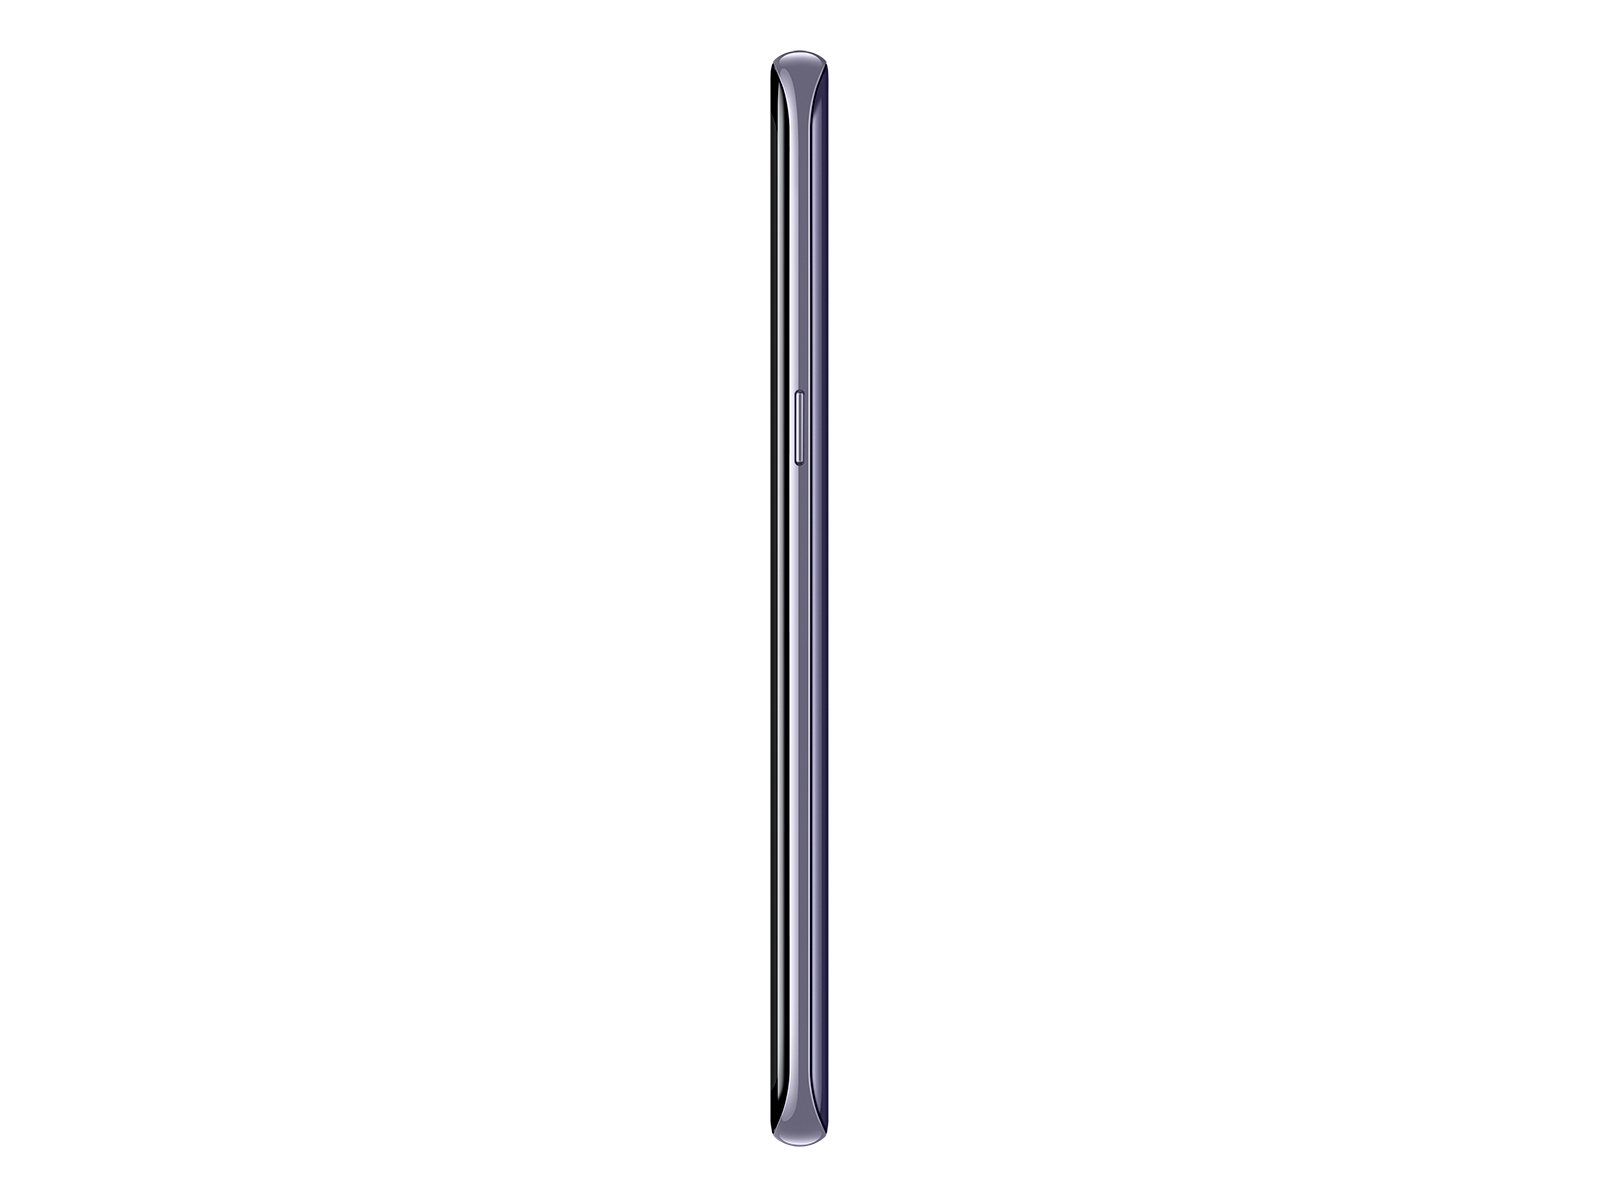 Thumbnail image of Galaxy S8 64GB (Verizon)